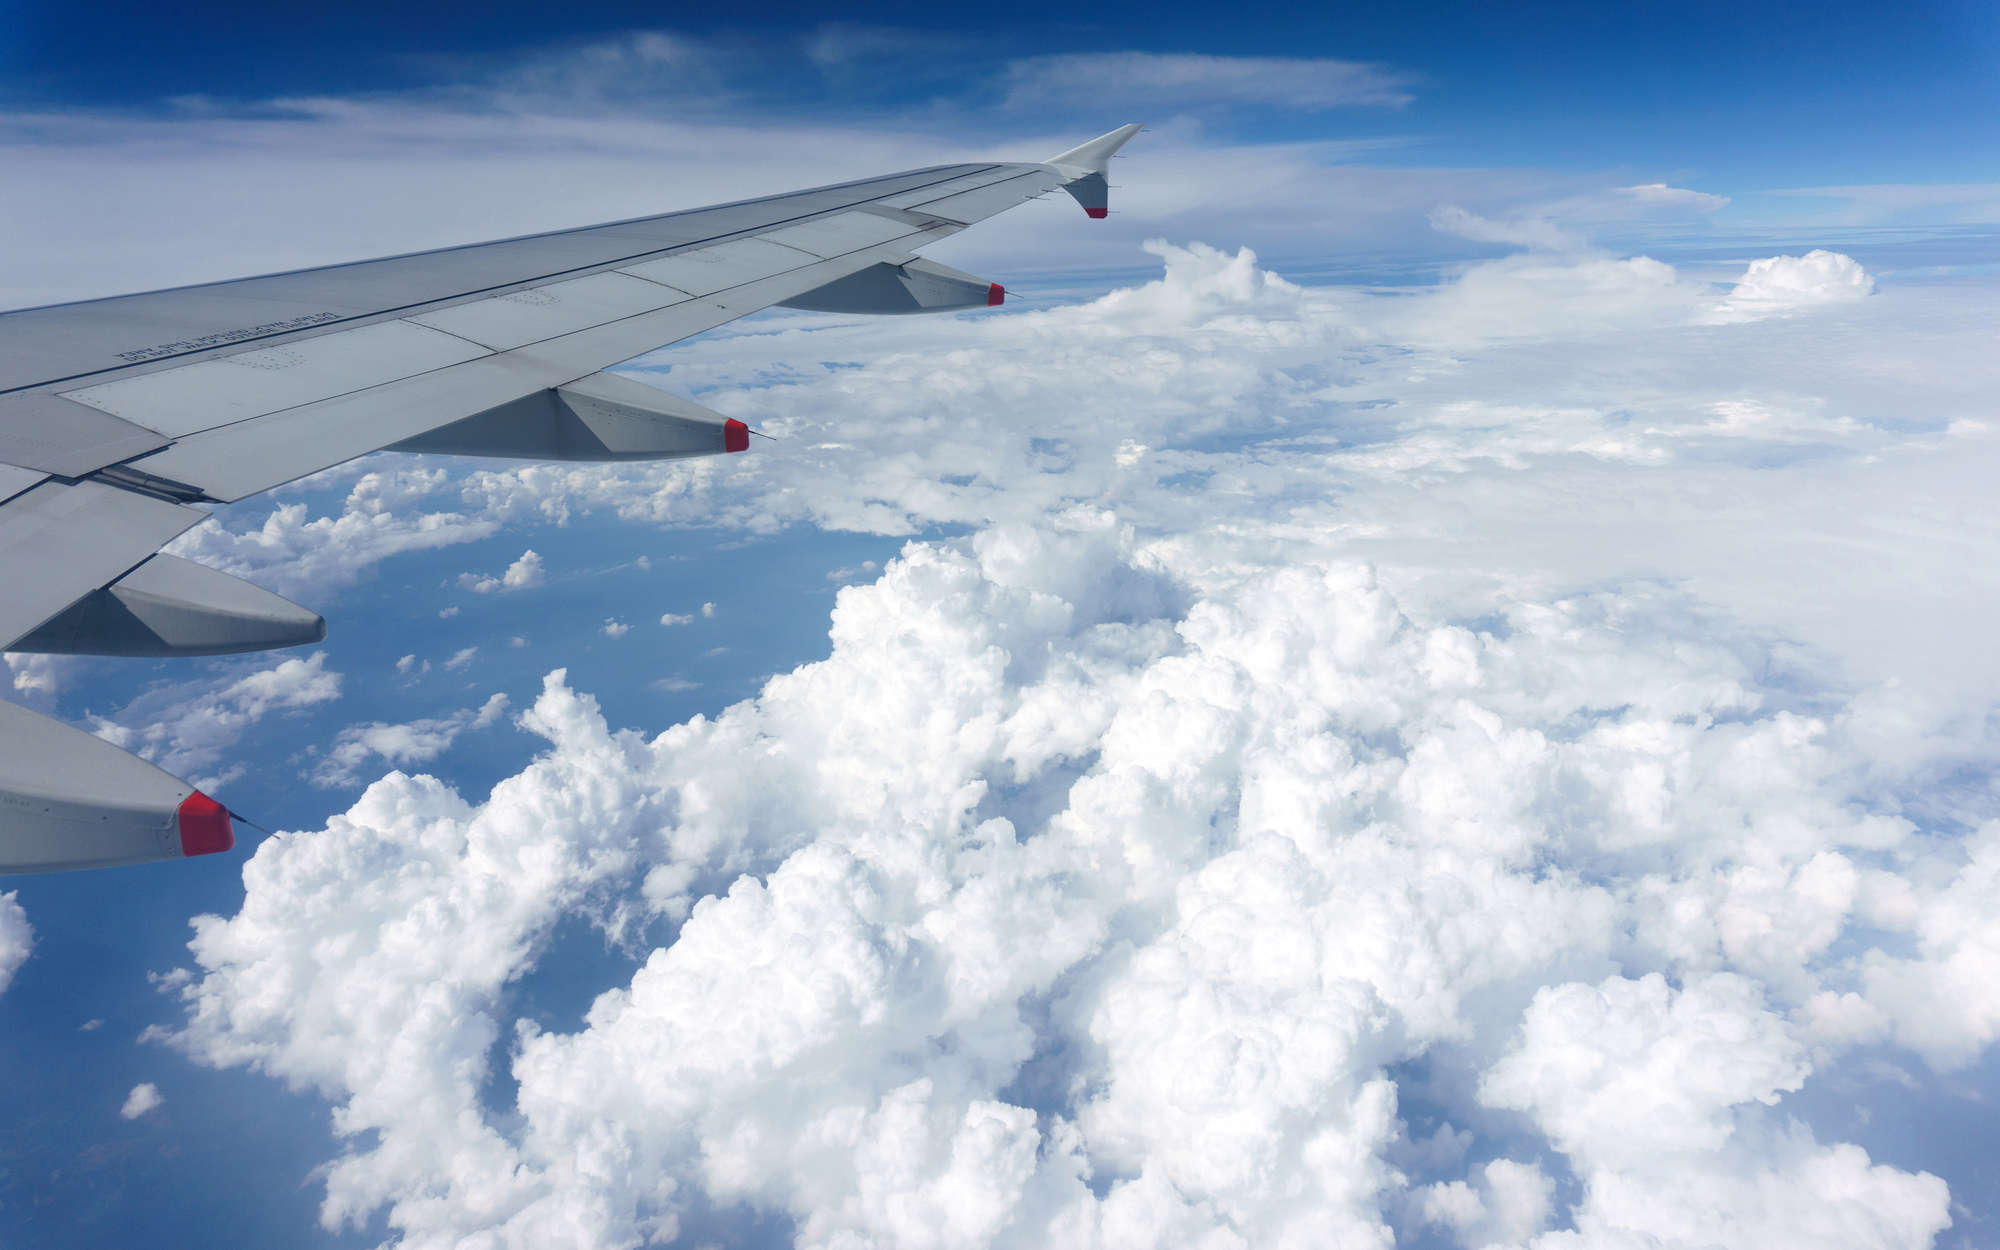             Digital behang Vliegtuig boven de wolken - Strukturenvlies
        